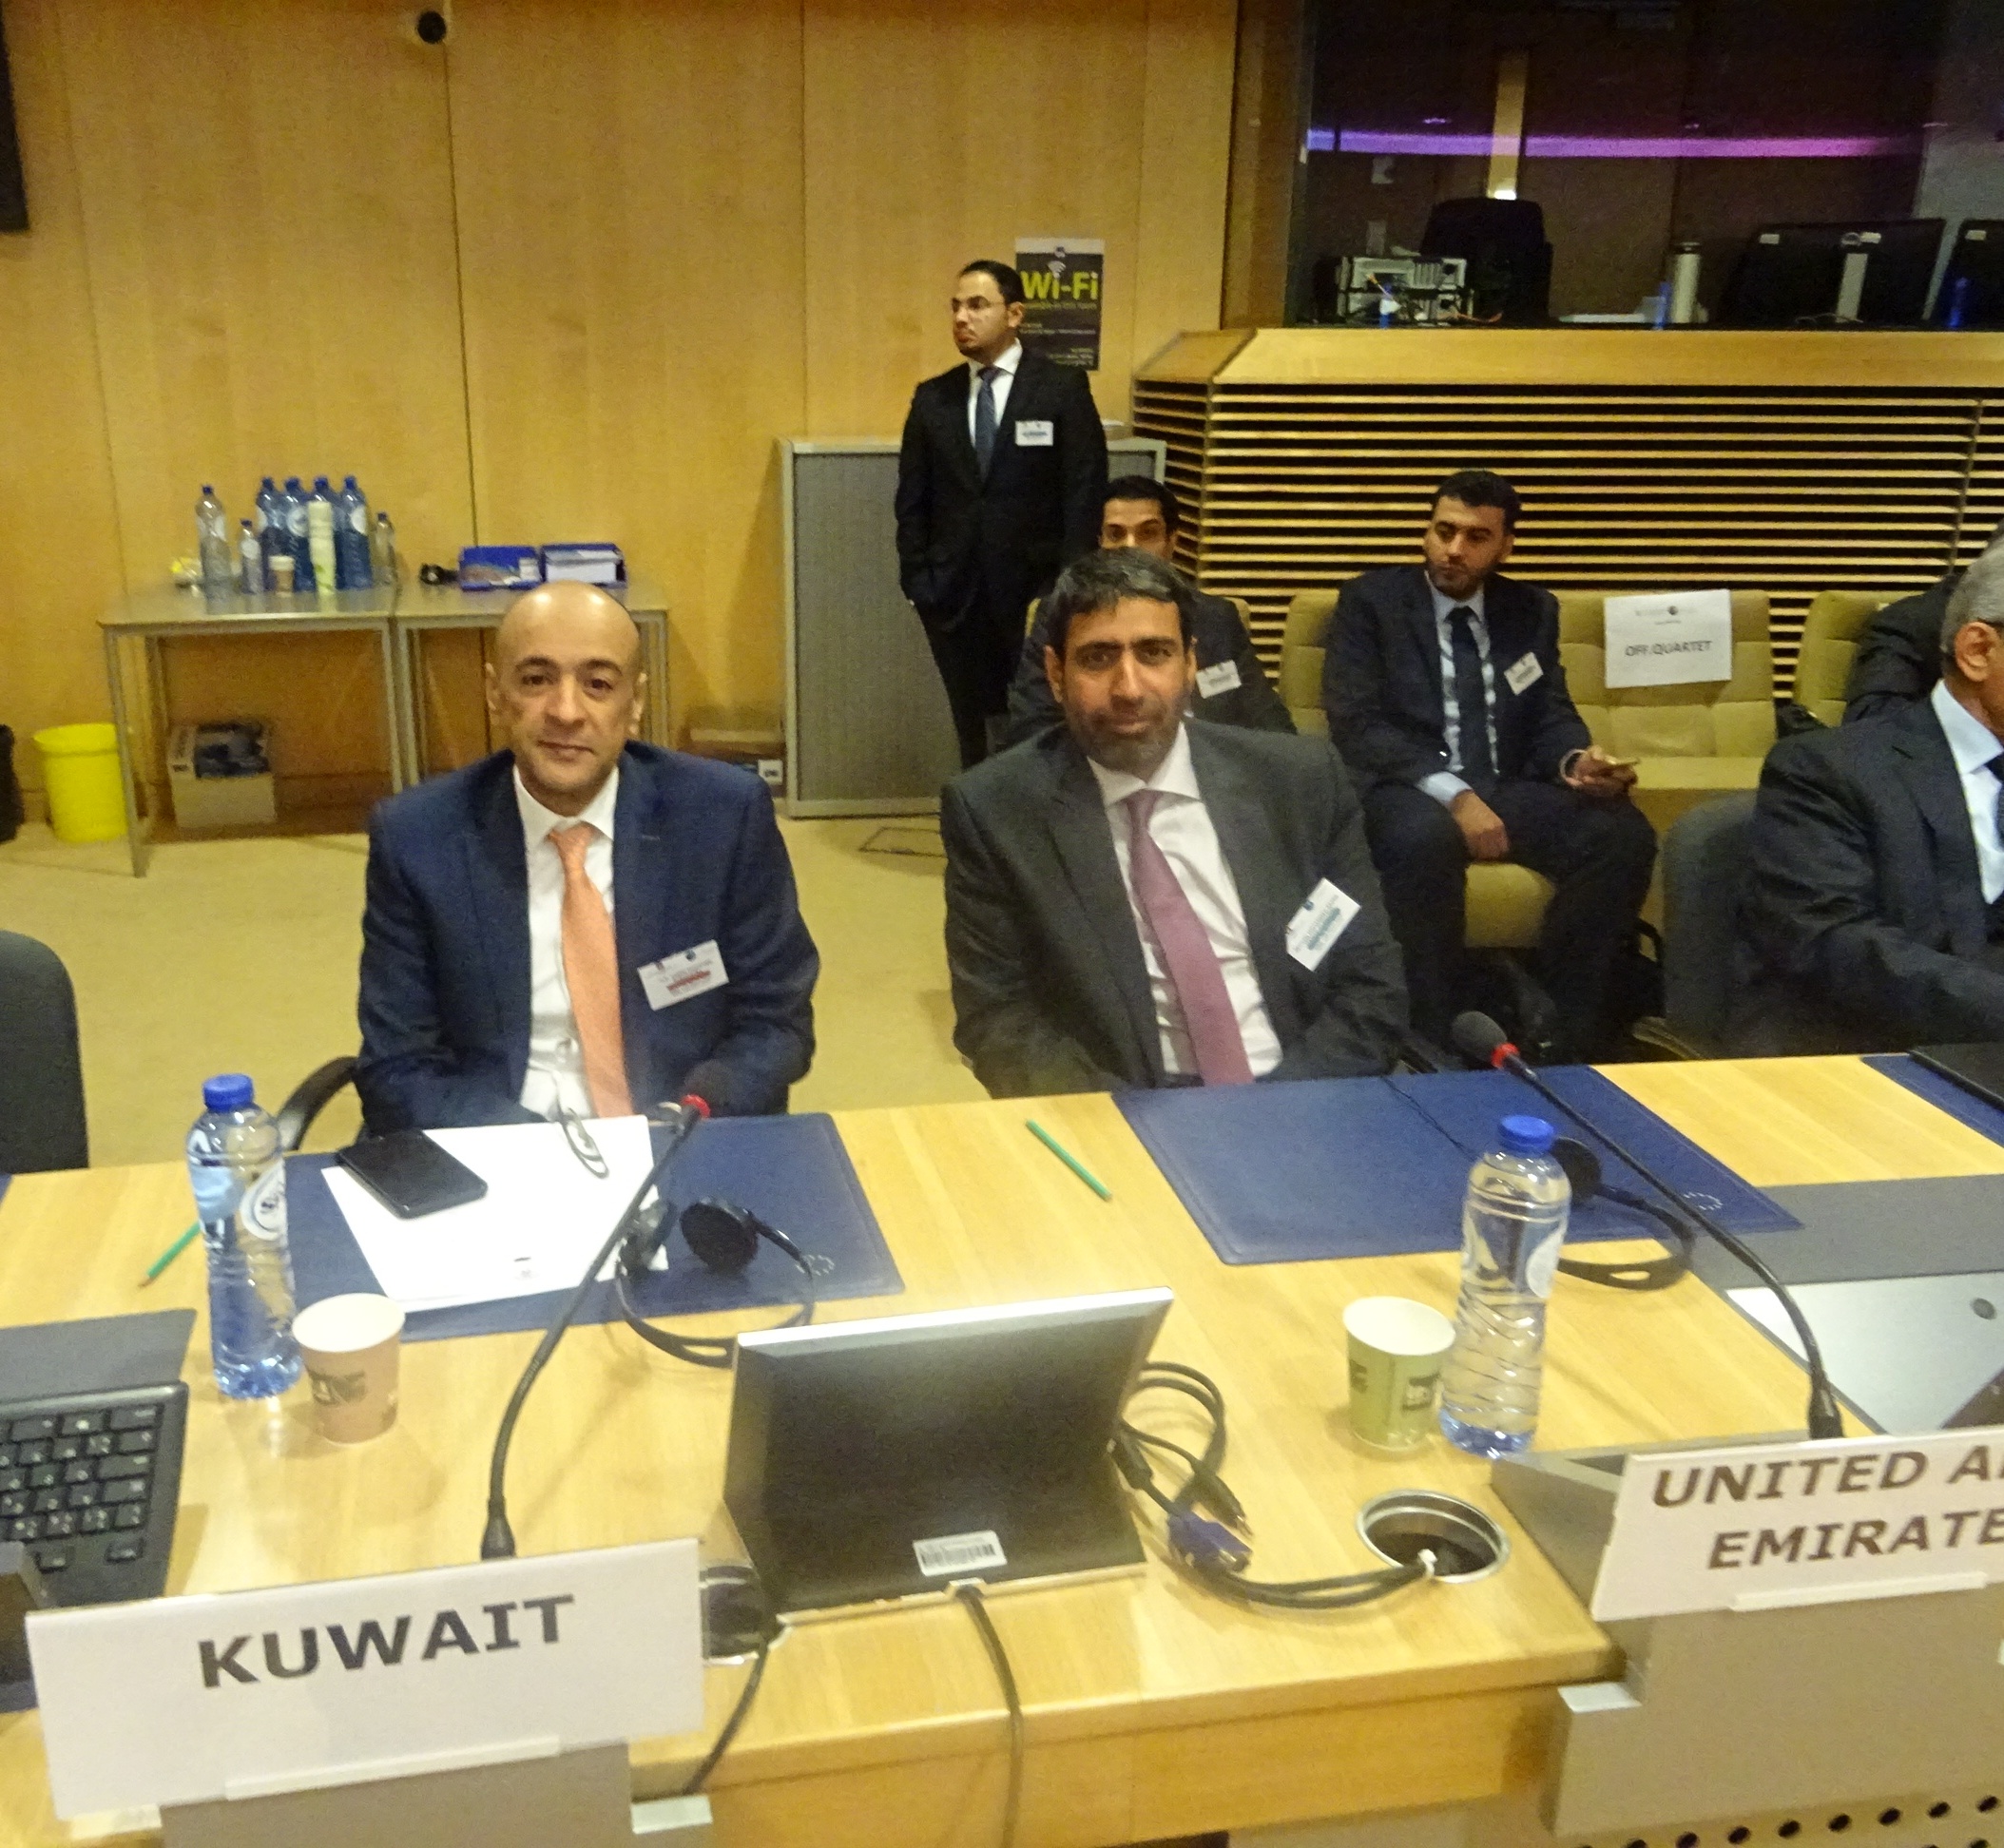 Kuwait's ambassador Jasem Al Budaiwi at the conference